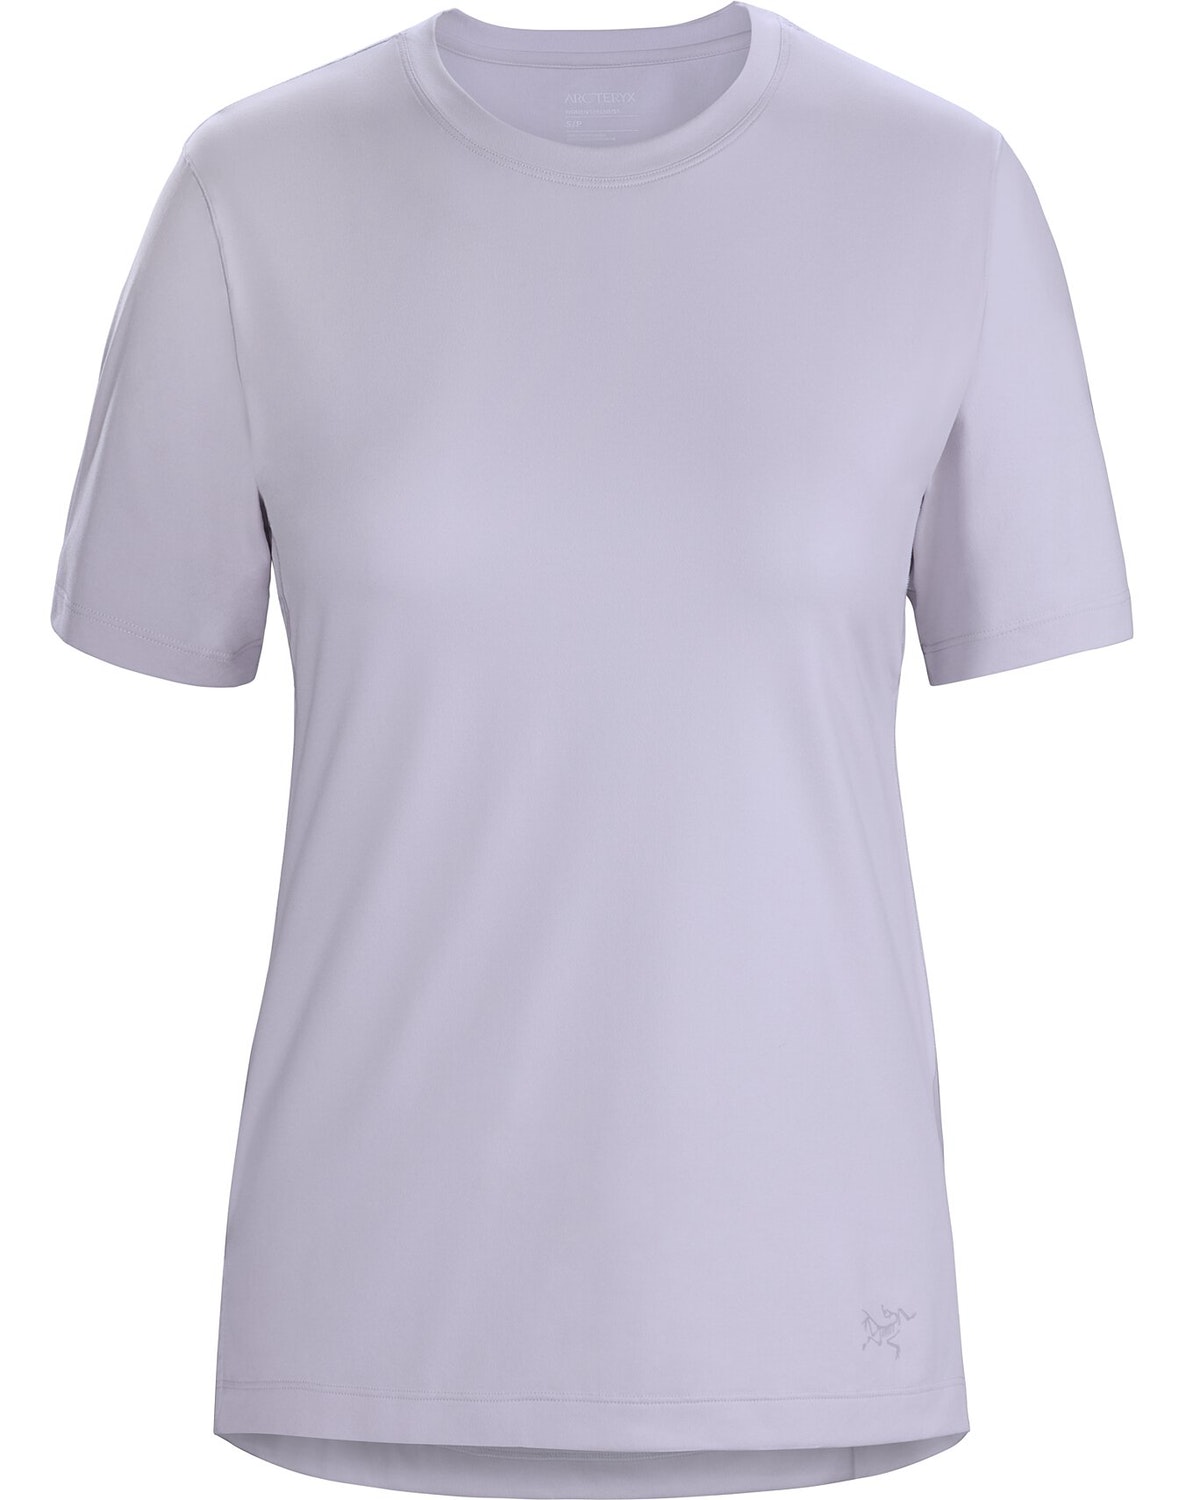 T-shirt Arc'teryx Remige Donna Viola Chiaro - IT-135379